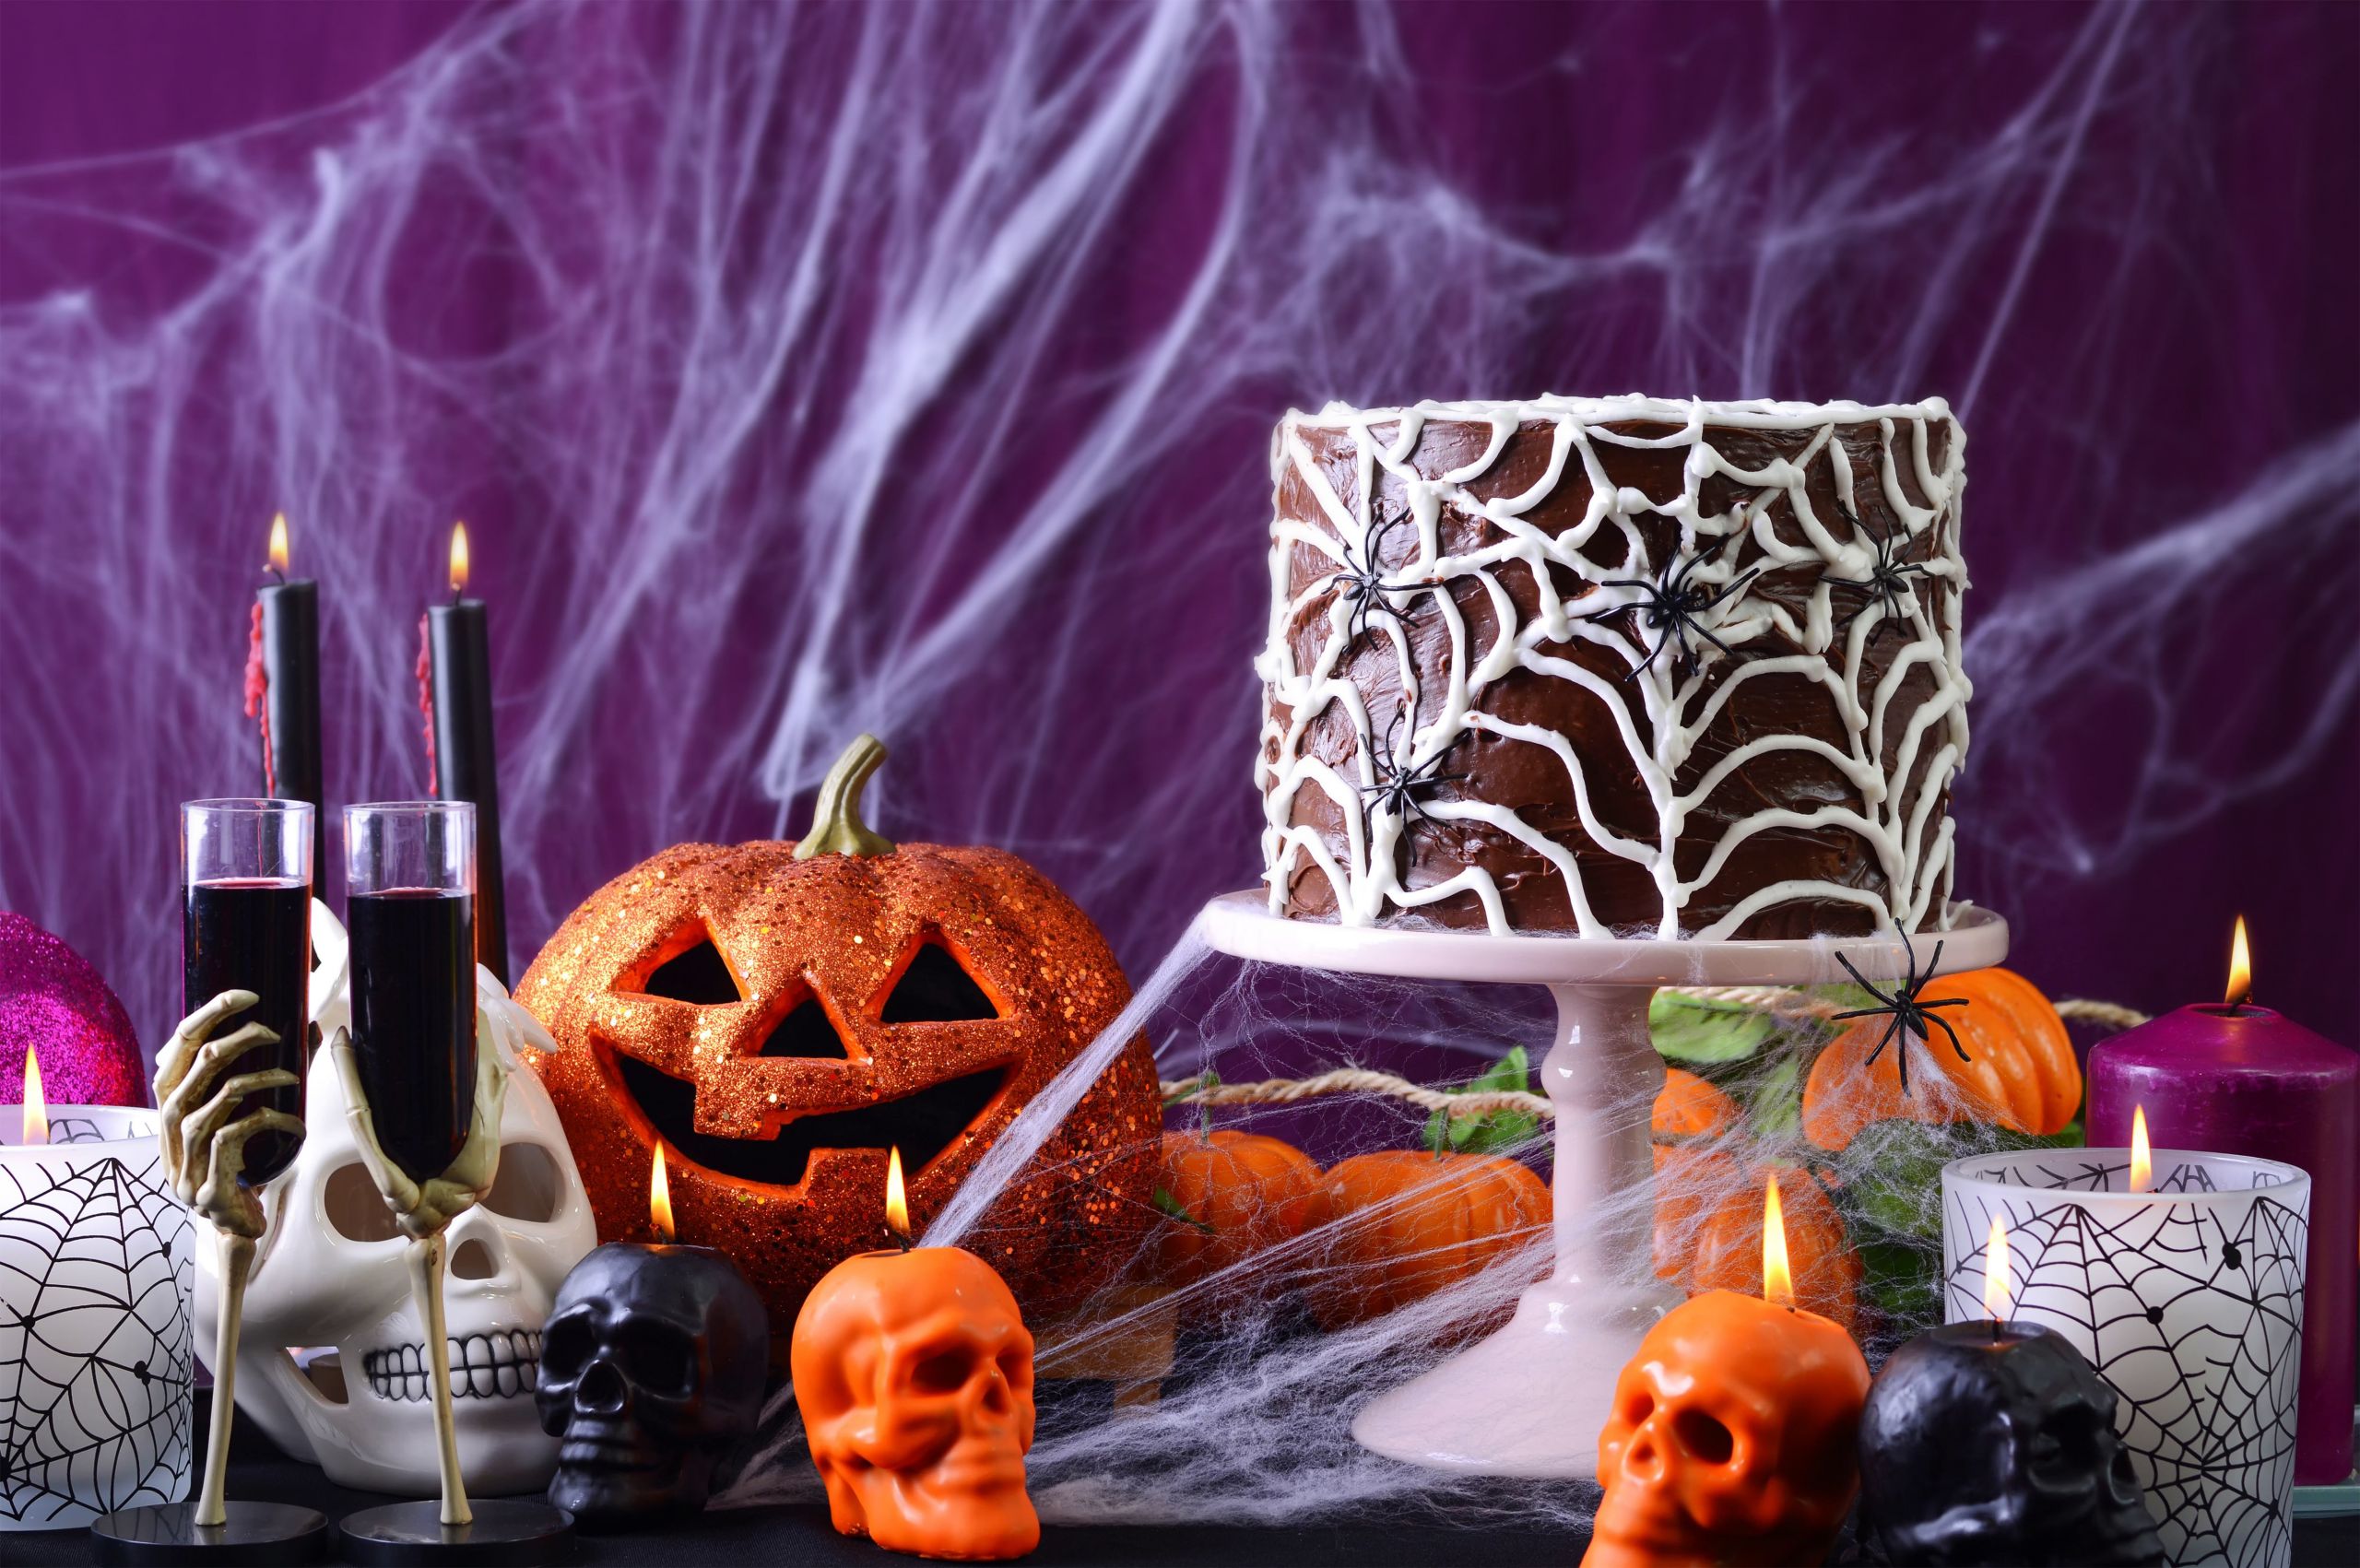 Dinner Ideas For Halloween Party
 Halloween Dinner Party Menu Ideas for a Spooky Soiree